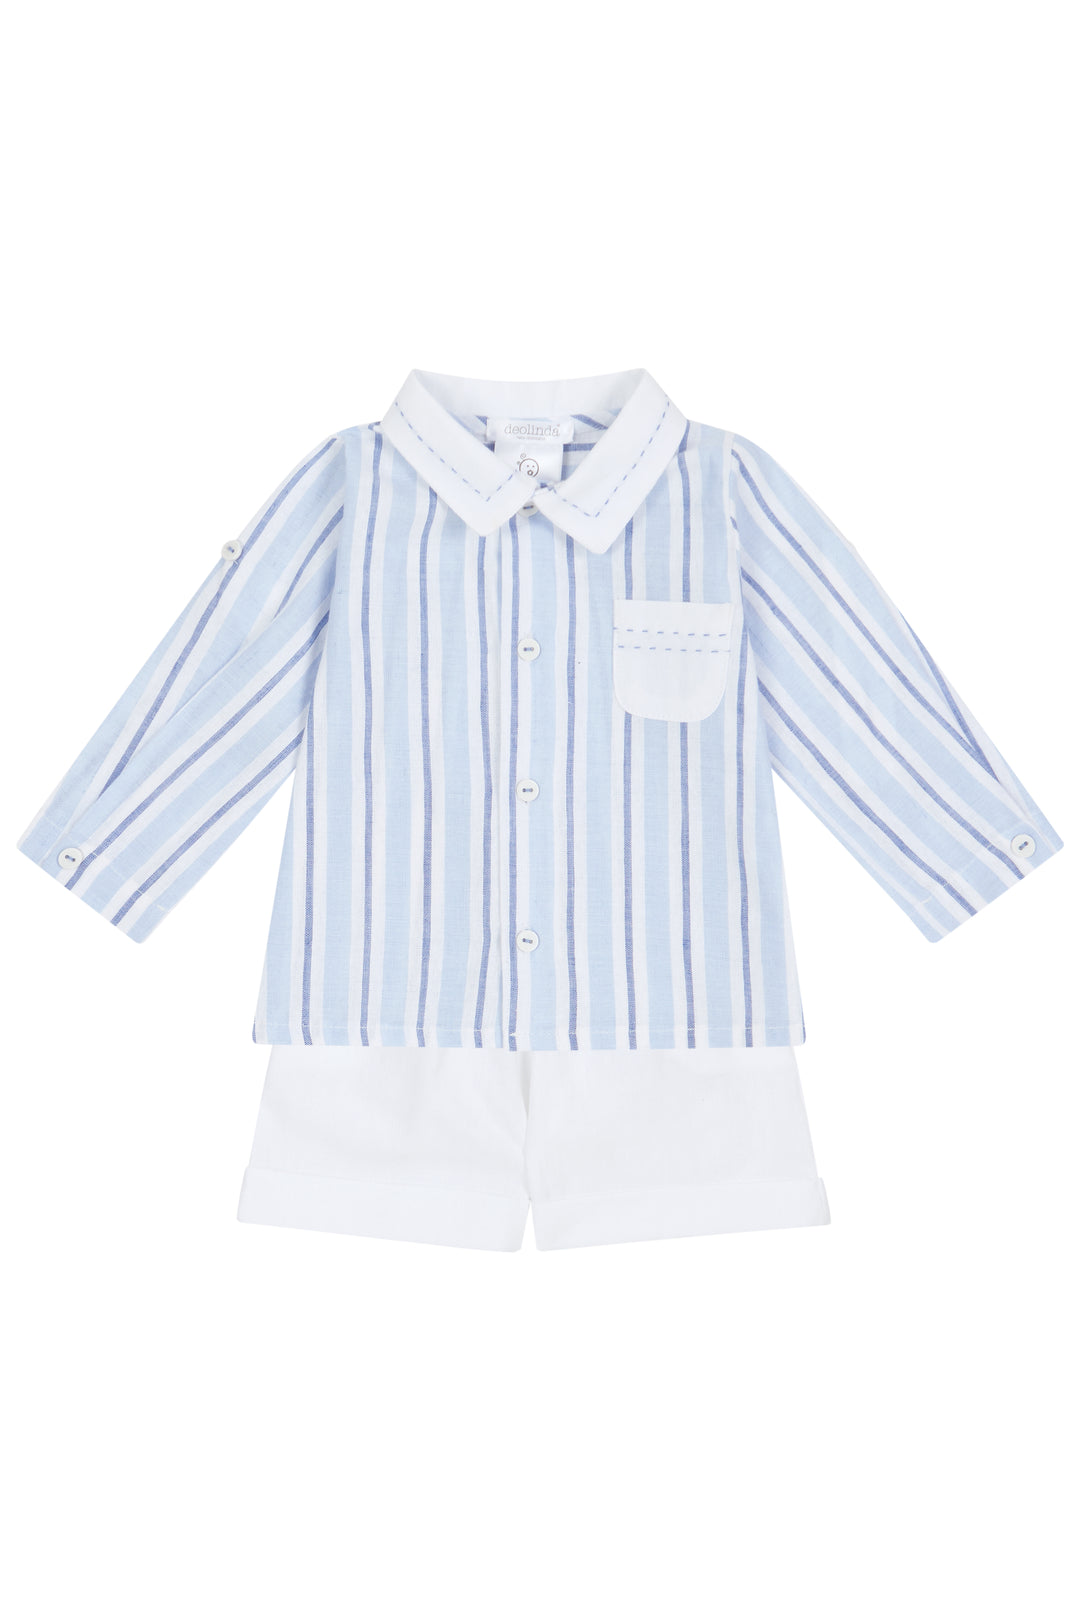 Deolinda PREORDER "Zachary" Blue Striped Shirt & Shorts | Millie and John